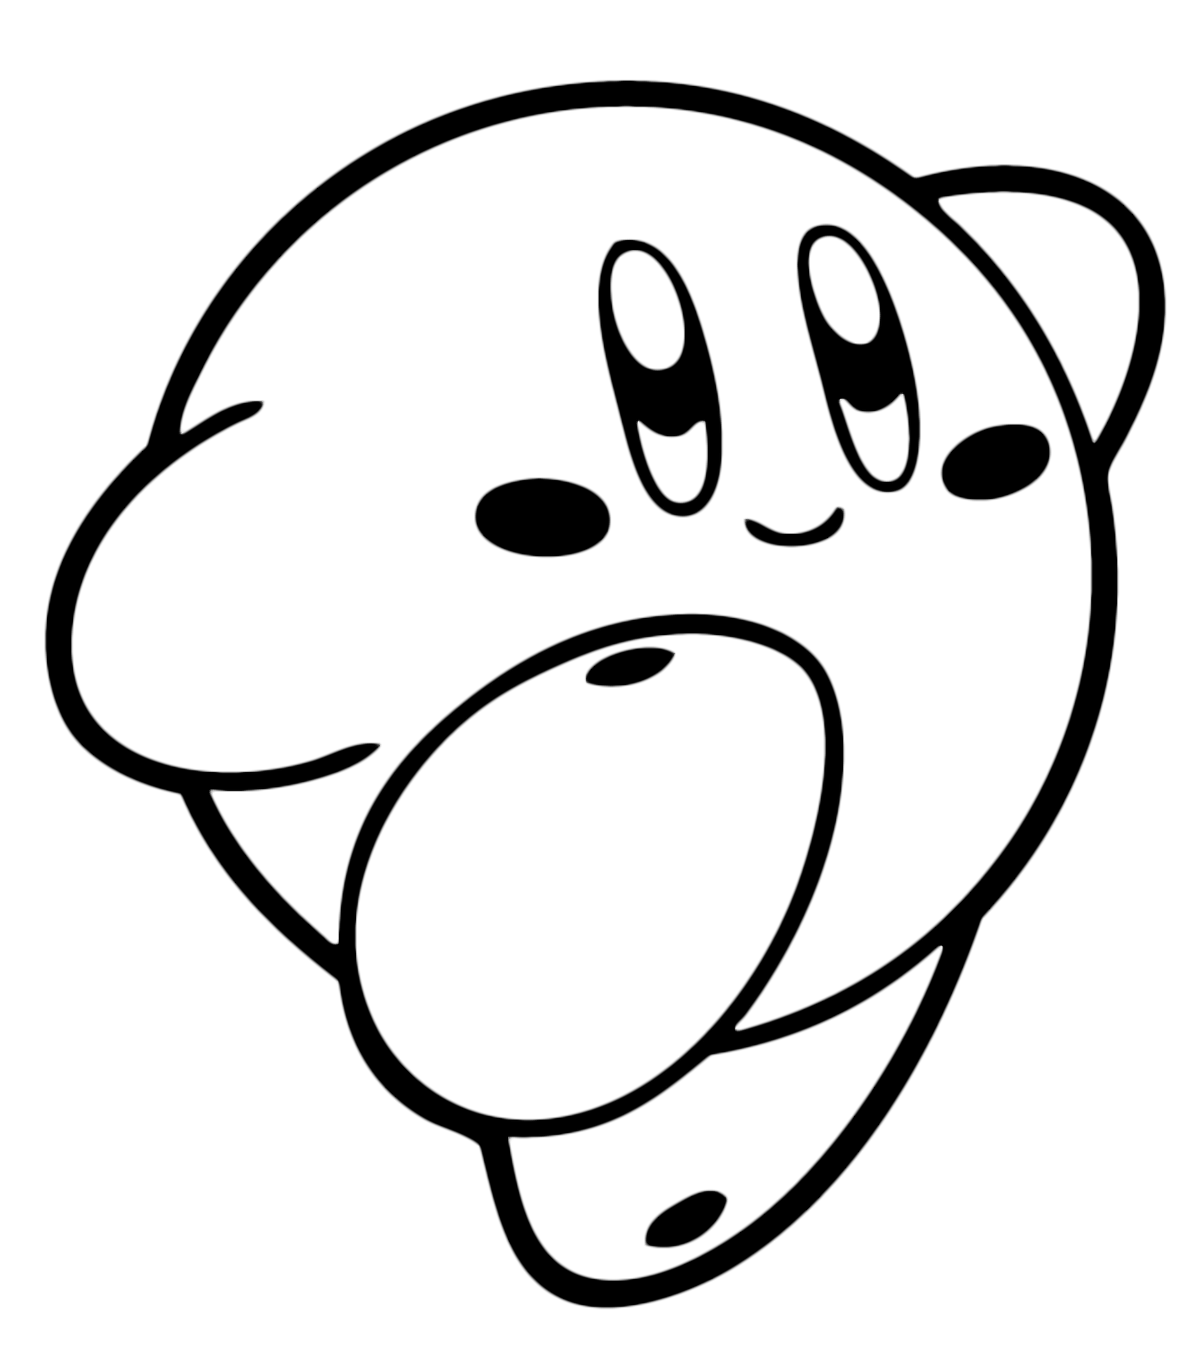 Kirby - Kirby saltella felice